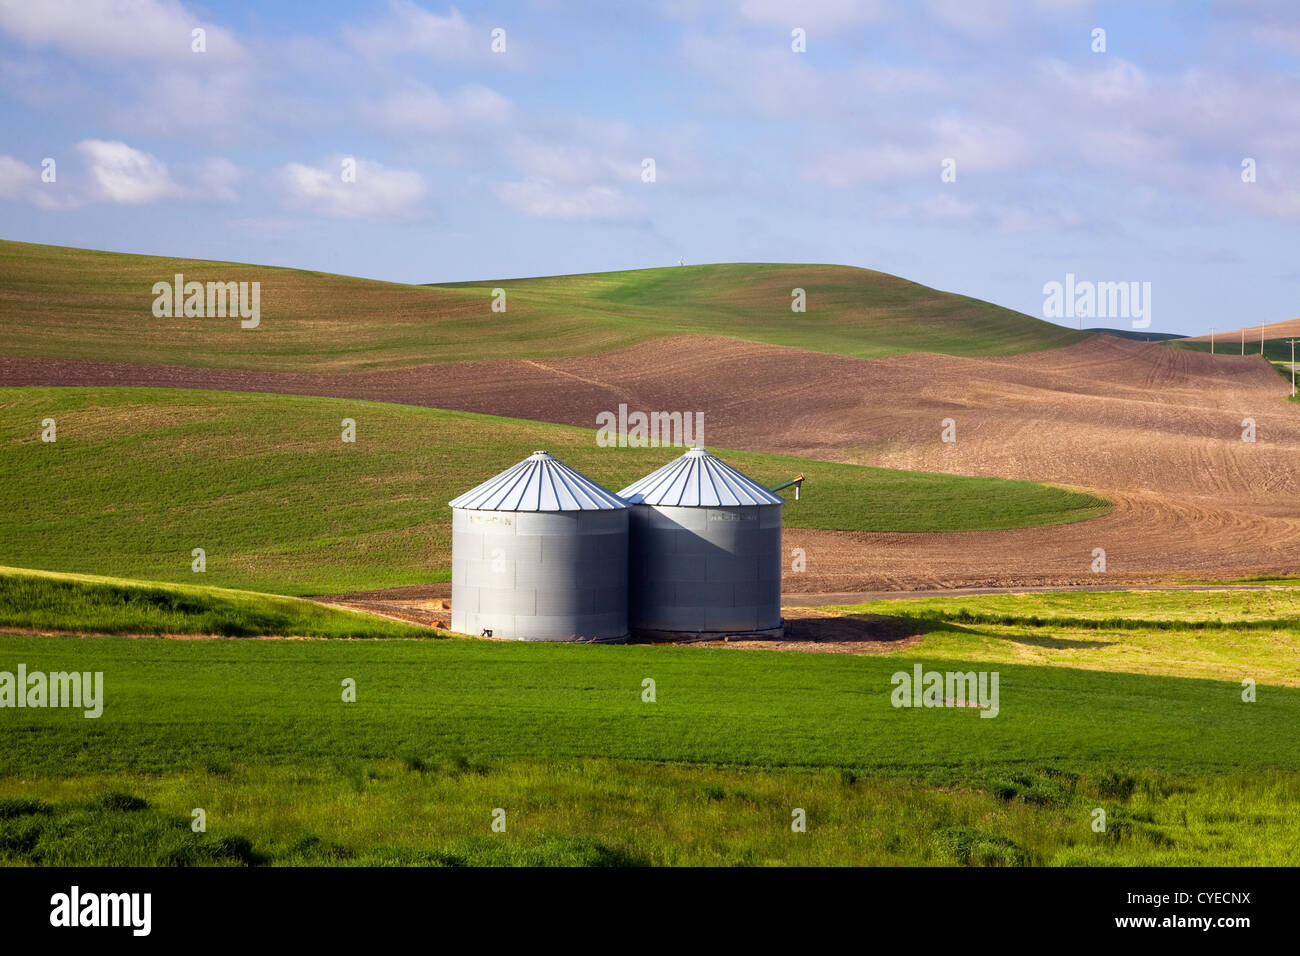 WA05485-00...WASHINGTON - Grain silos in a field near Steptoe in the agricultural Palouse region. Stock Photo